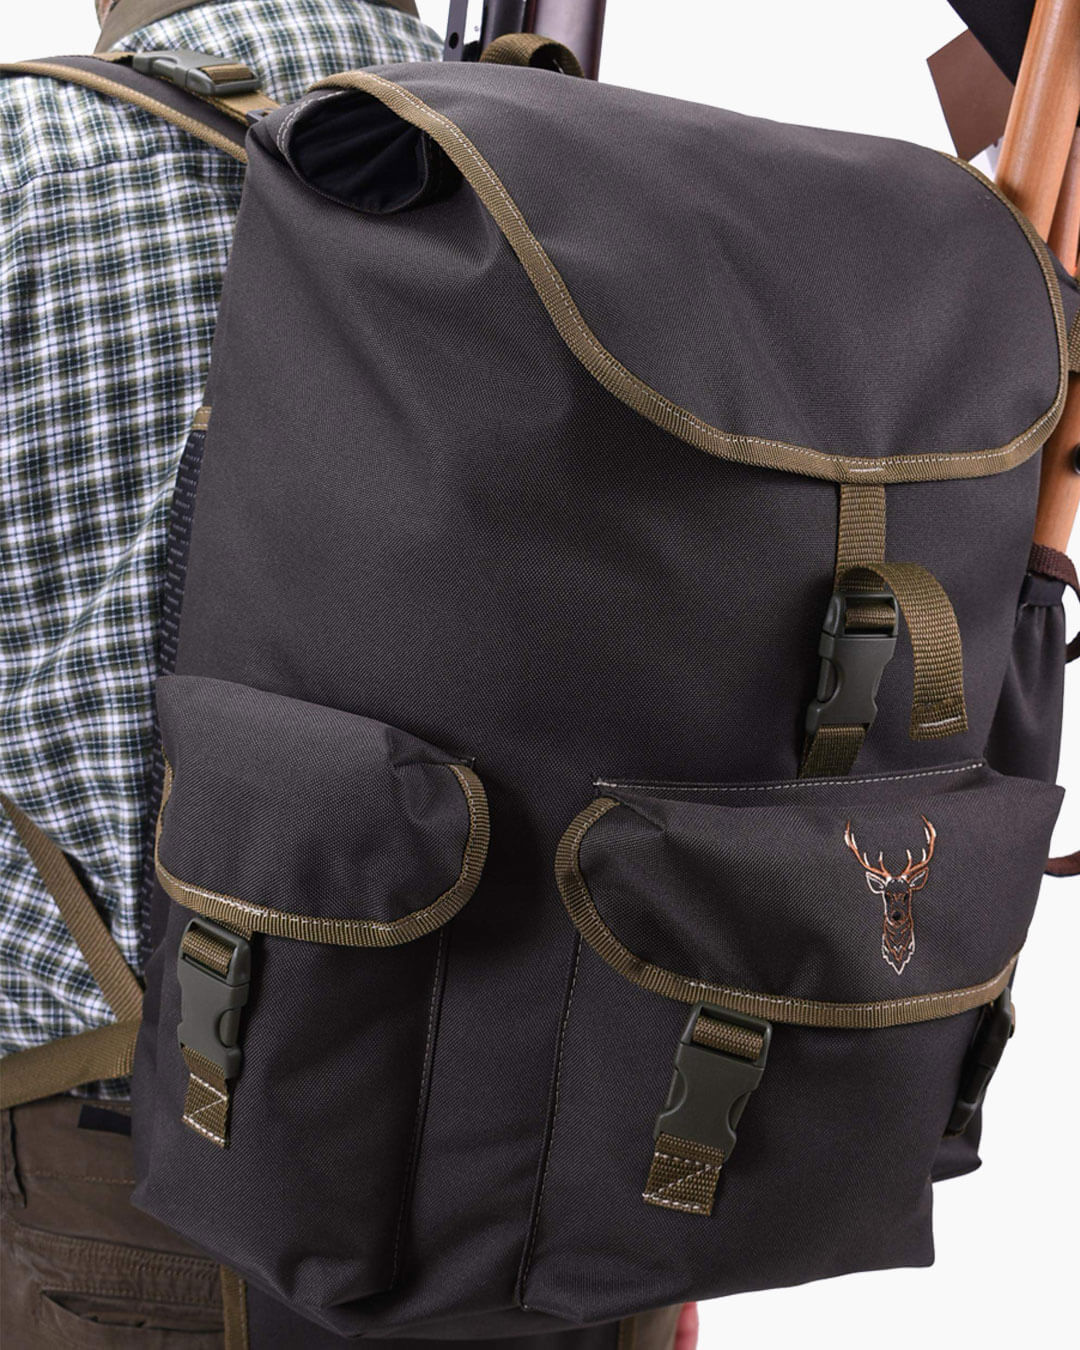 Poľovnícky batoh 35 litr. CLASSIC s chrbtovým nosením zbrane BALLPOLO